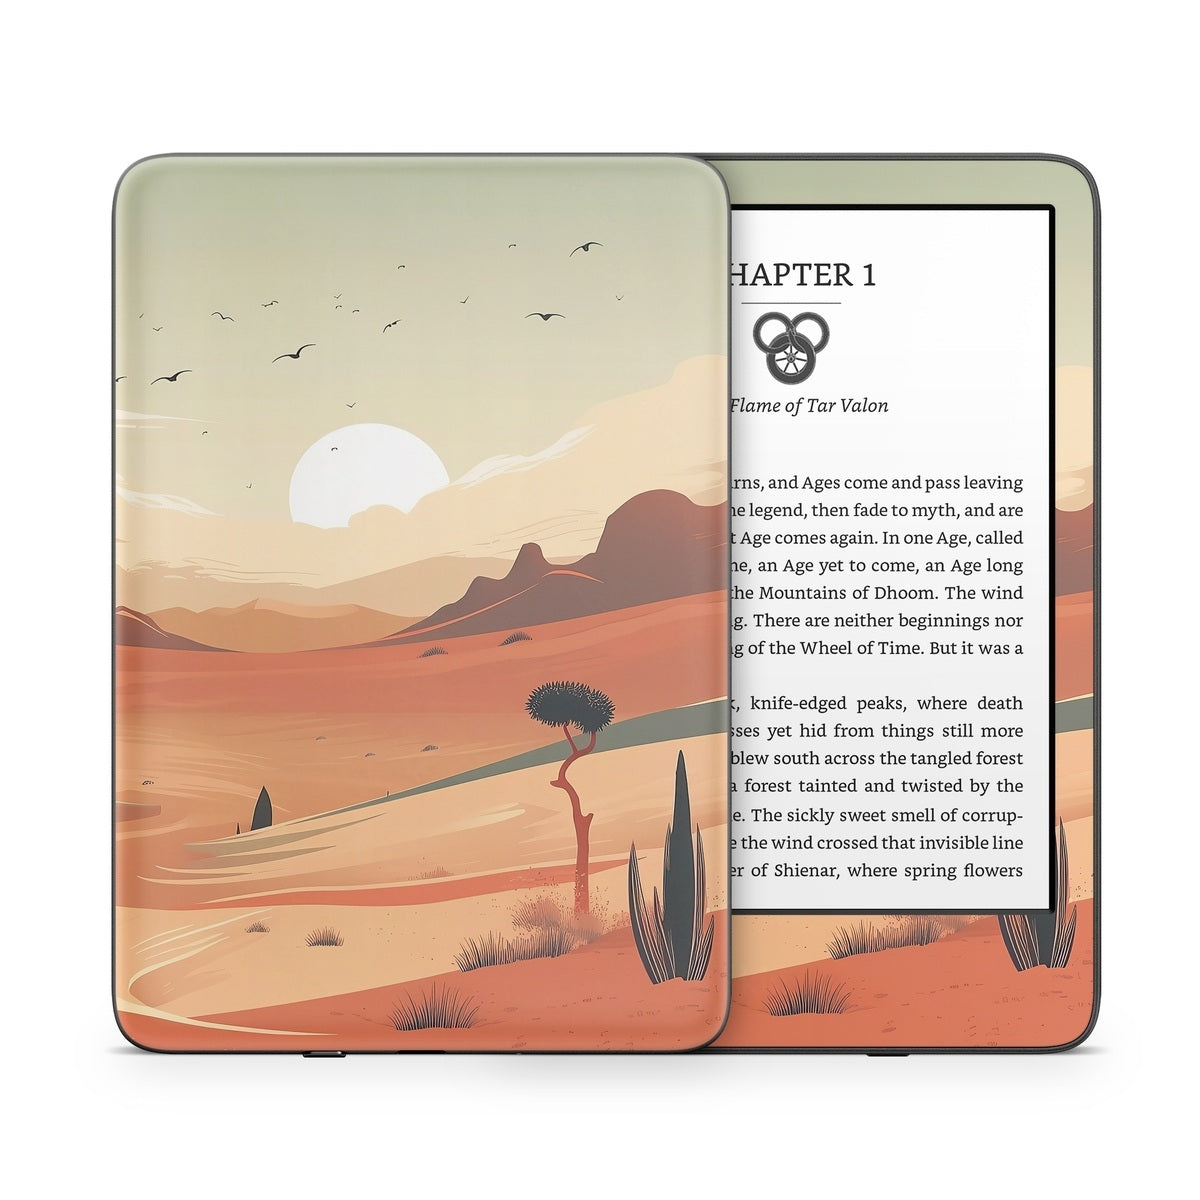 Meandering Desert - Amazon Kindle Skin